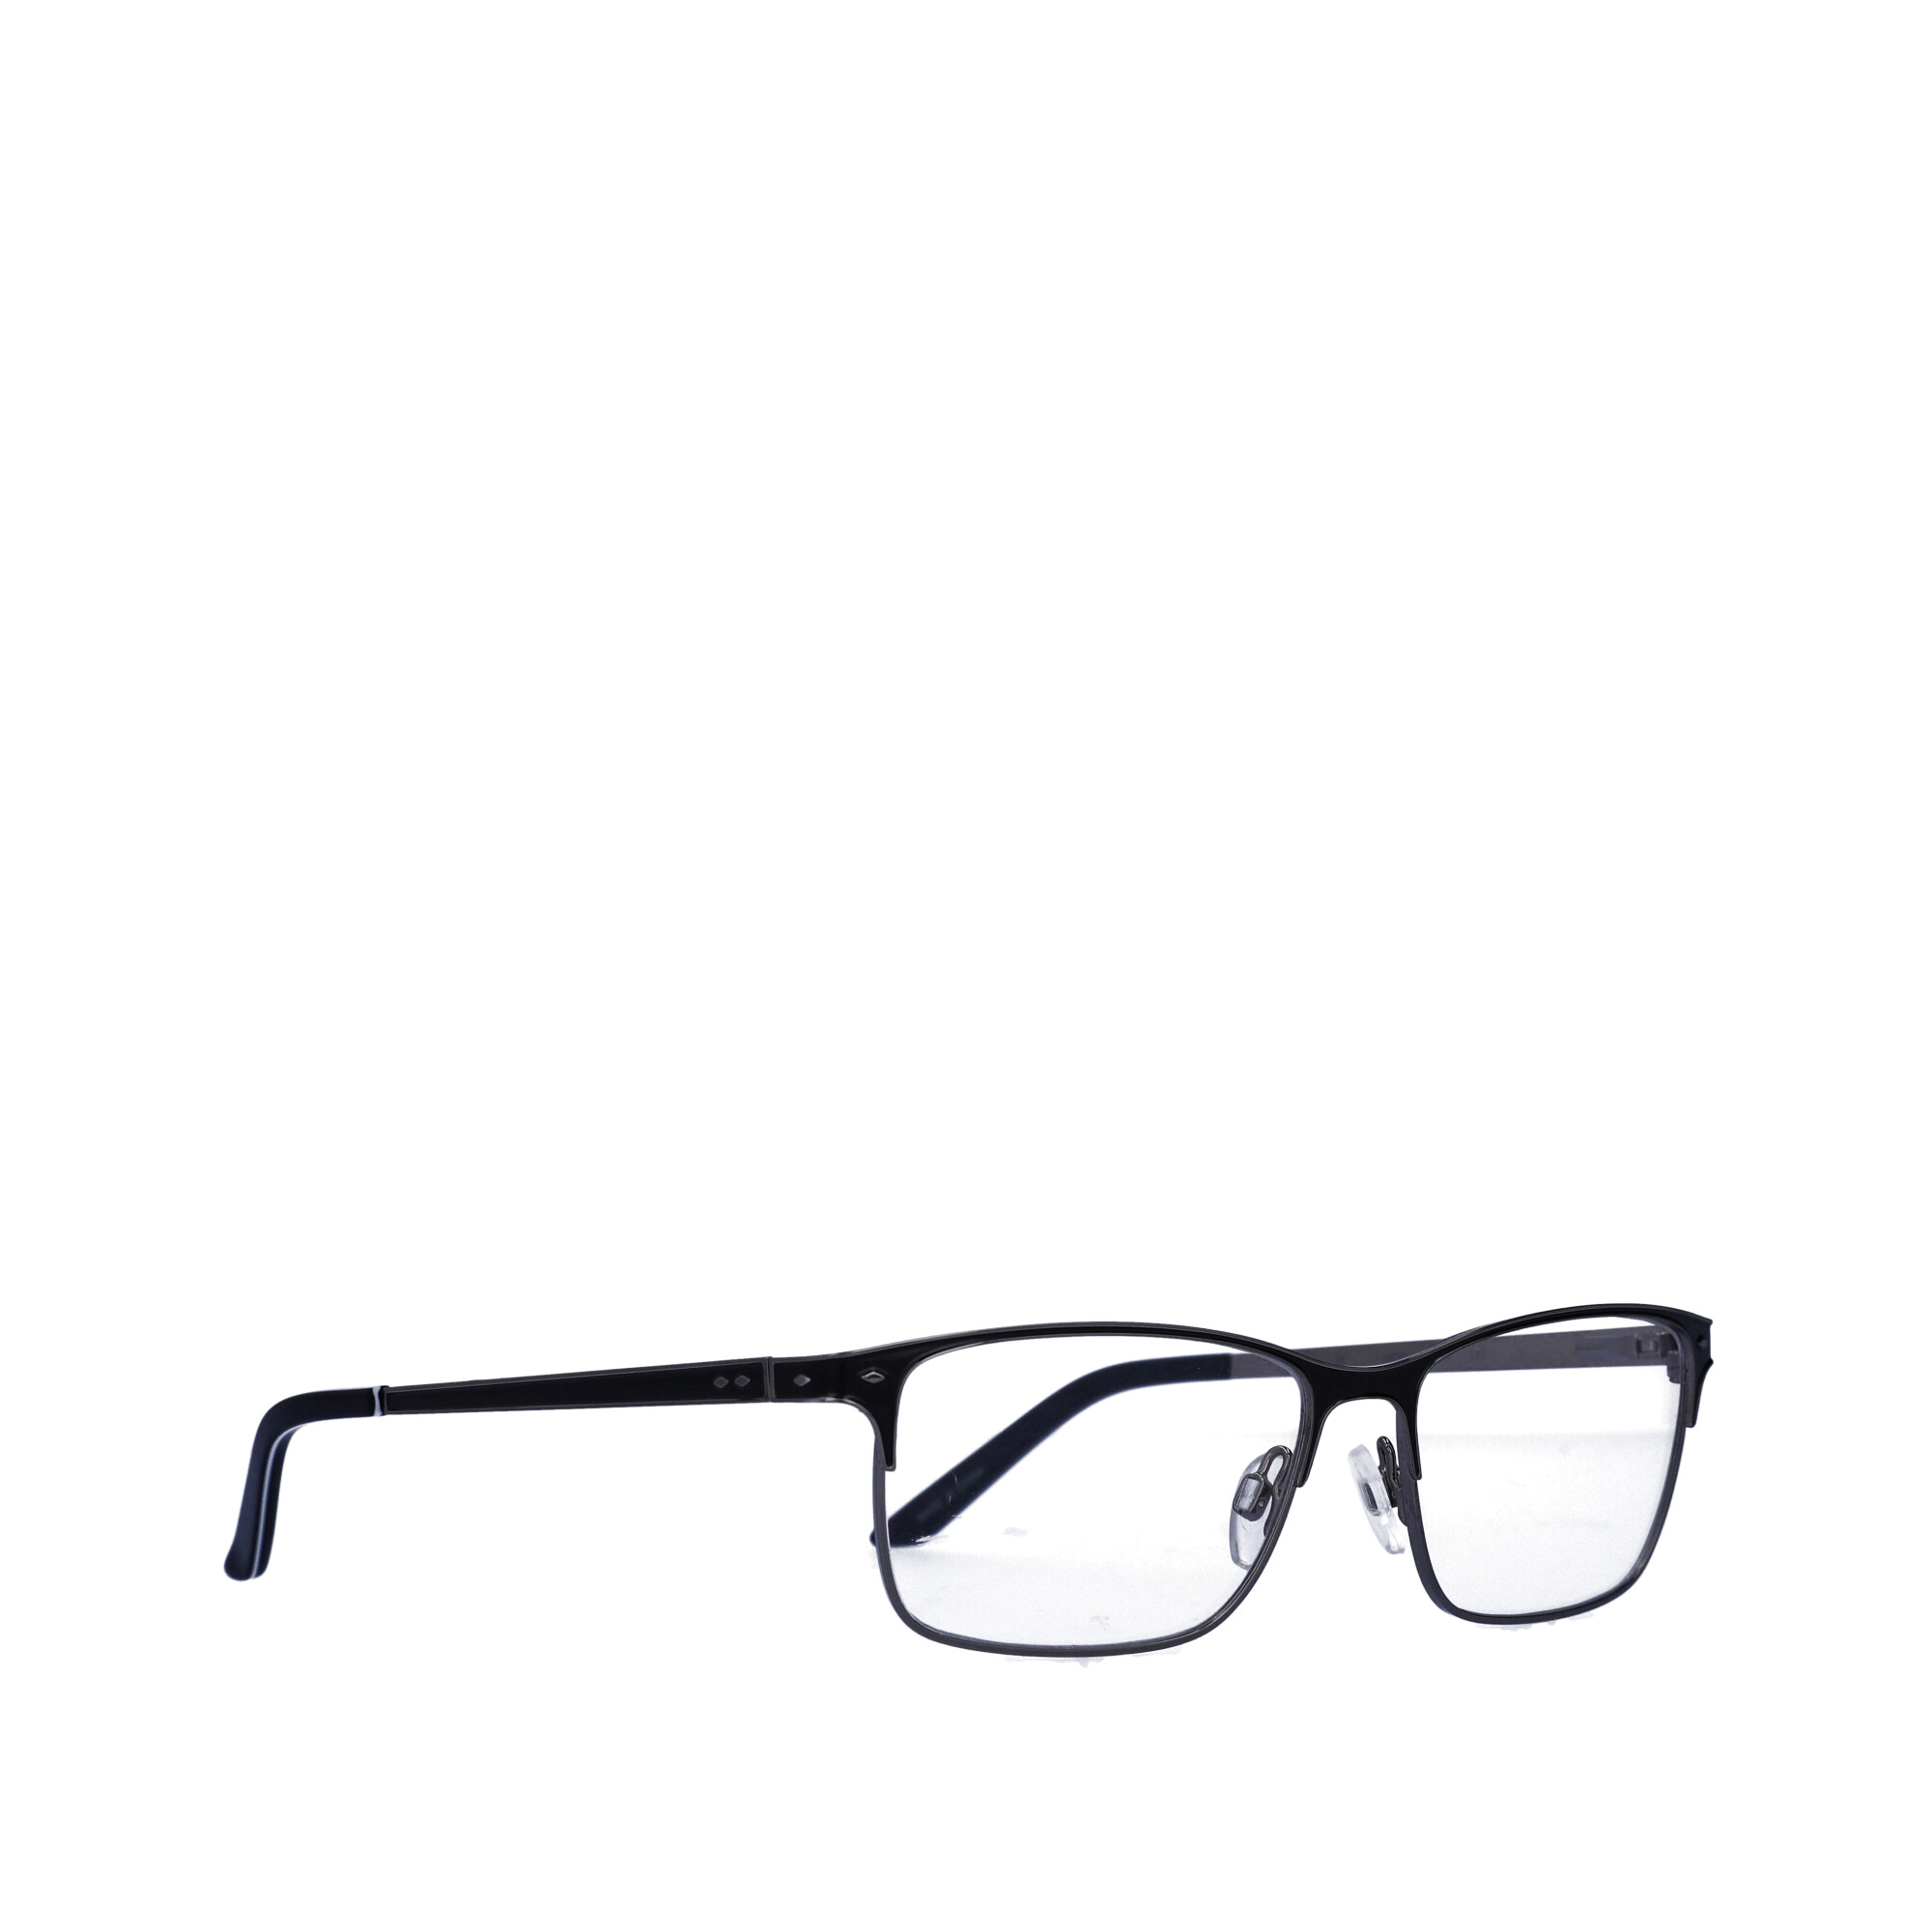 Walmart Men's Rx'able Eyeglasses, Mop51, Black, 52-15-140 - image 2 of 13